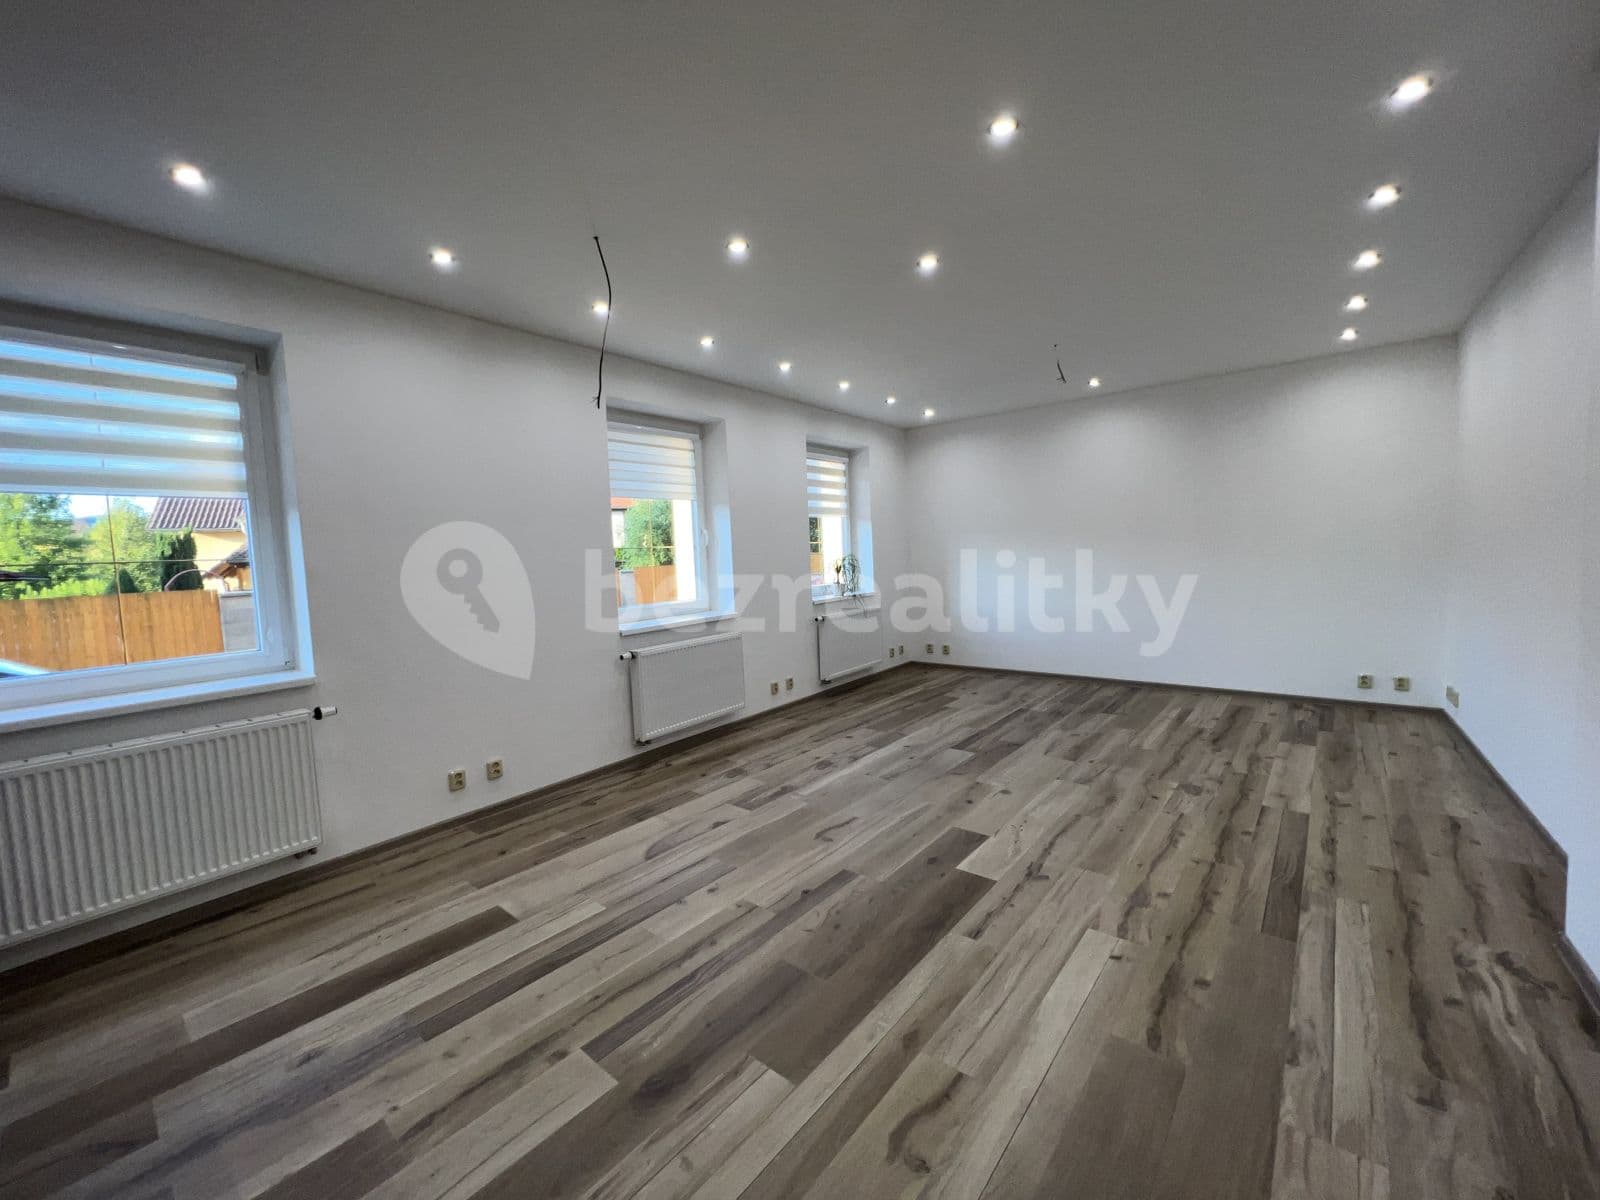 1 bedroom with open-plan kitchen flat to rent, 86 m², V Aleji, Chabařovice, Ústecký Region